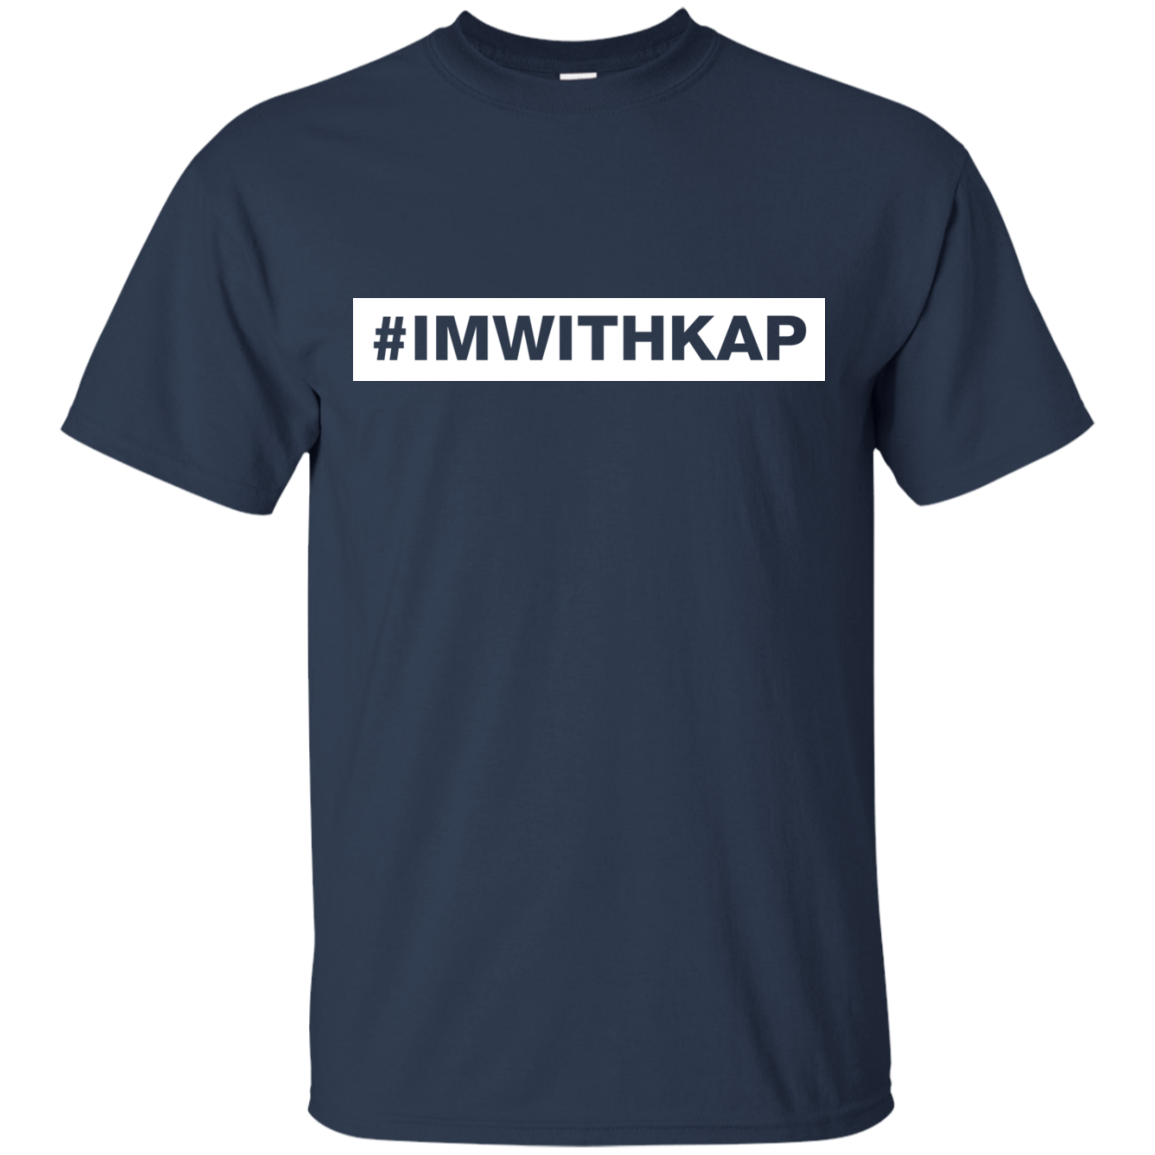 #IMWITHKAP- I'm With Kap shirt, hoodie, tank